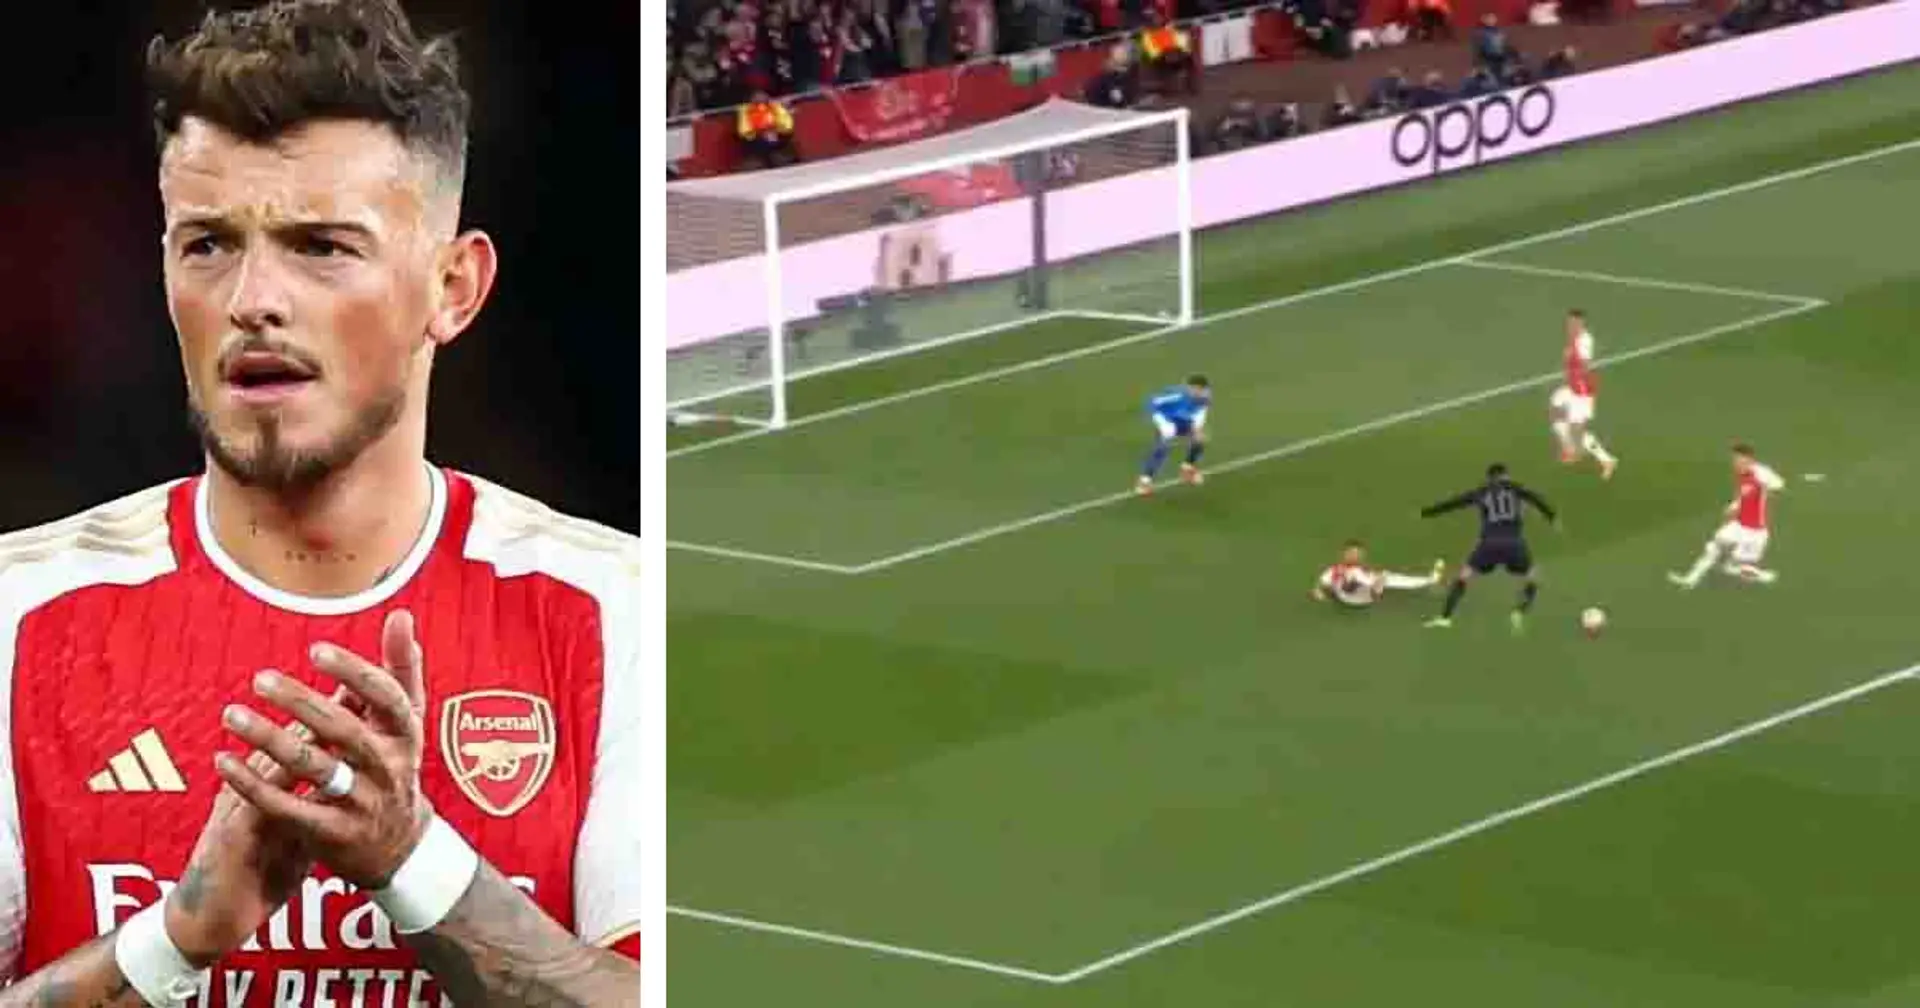 'Absolutely insane': Arsenal fans love Ben White's heroic challenge to stop Leroy Sane's goal